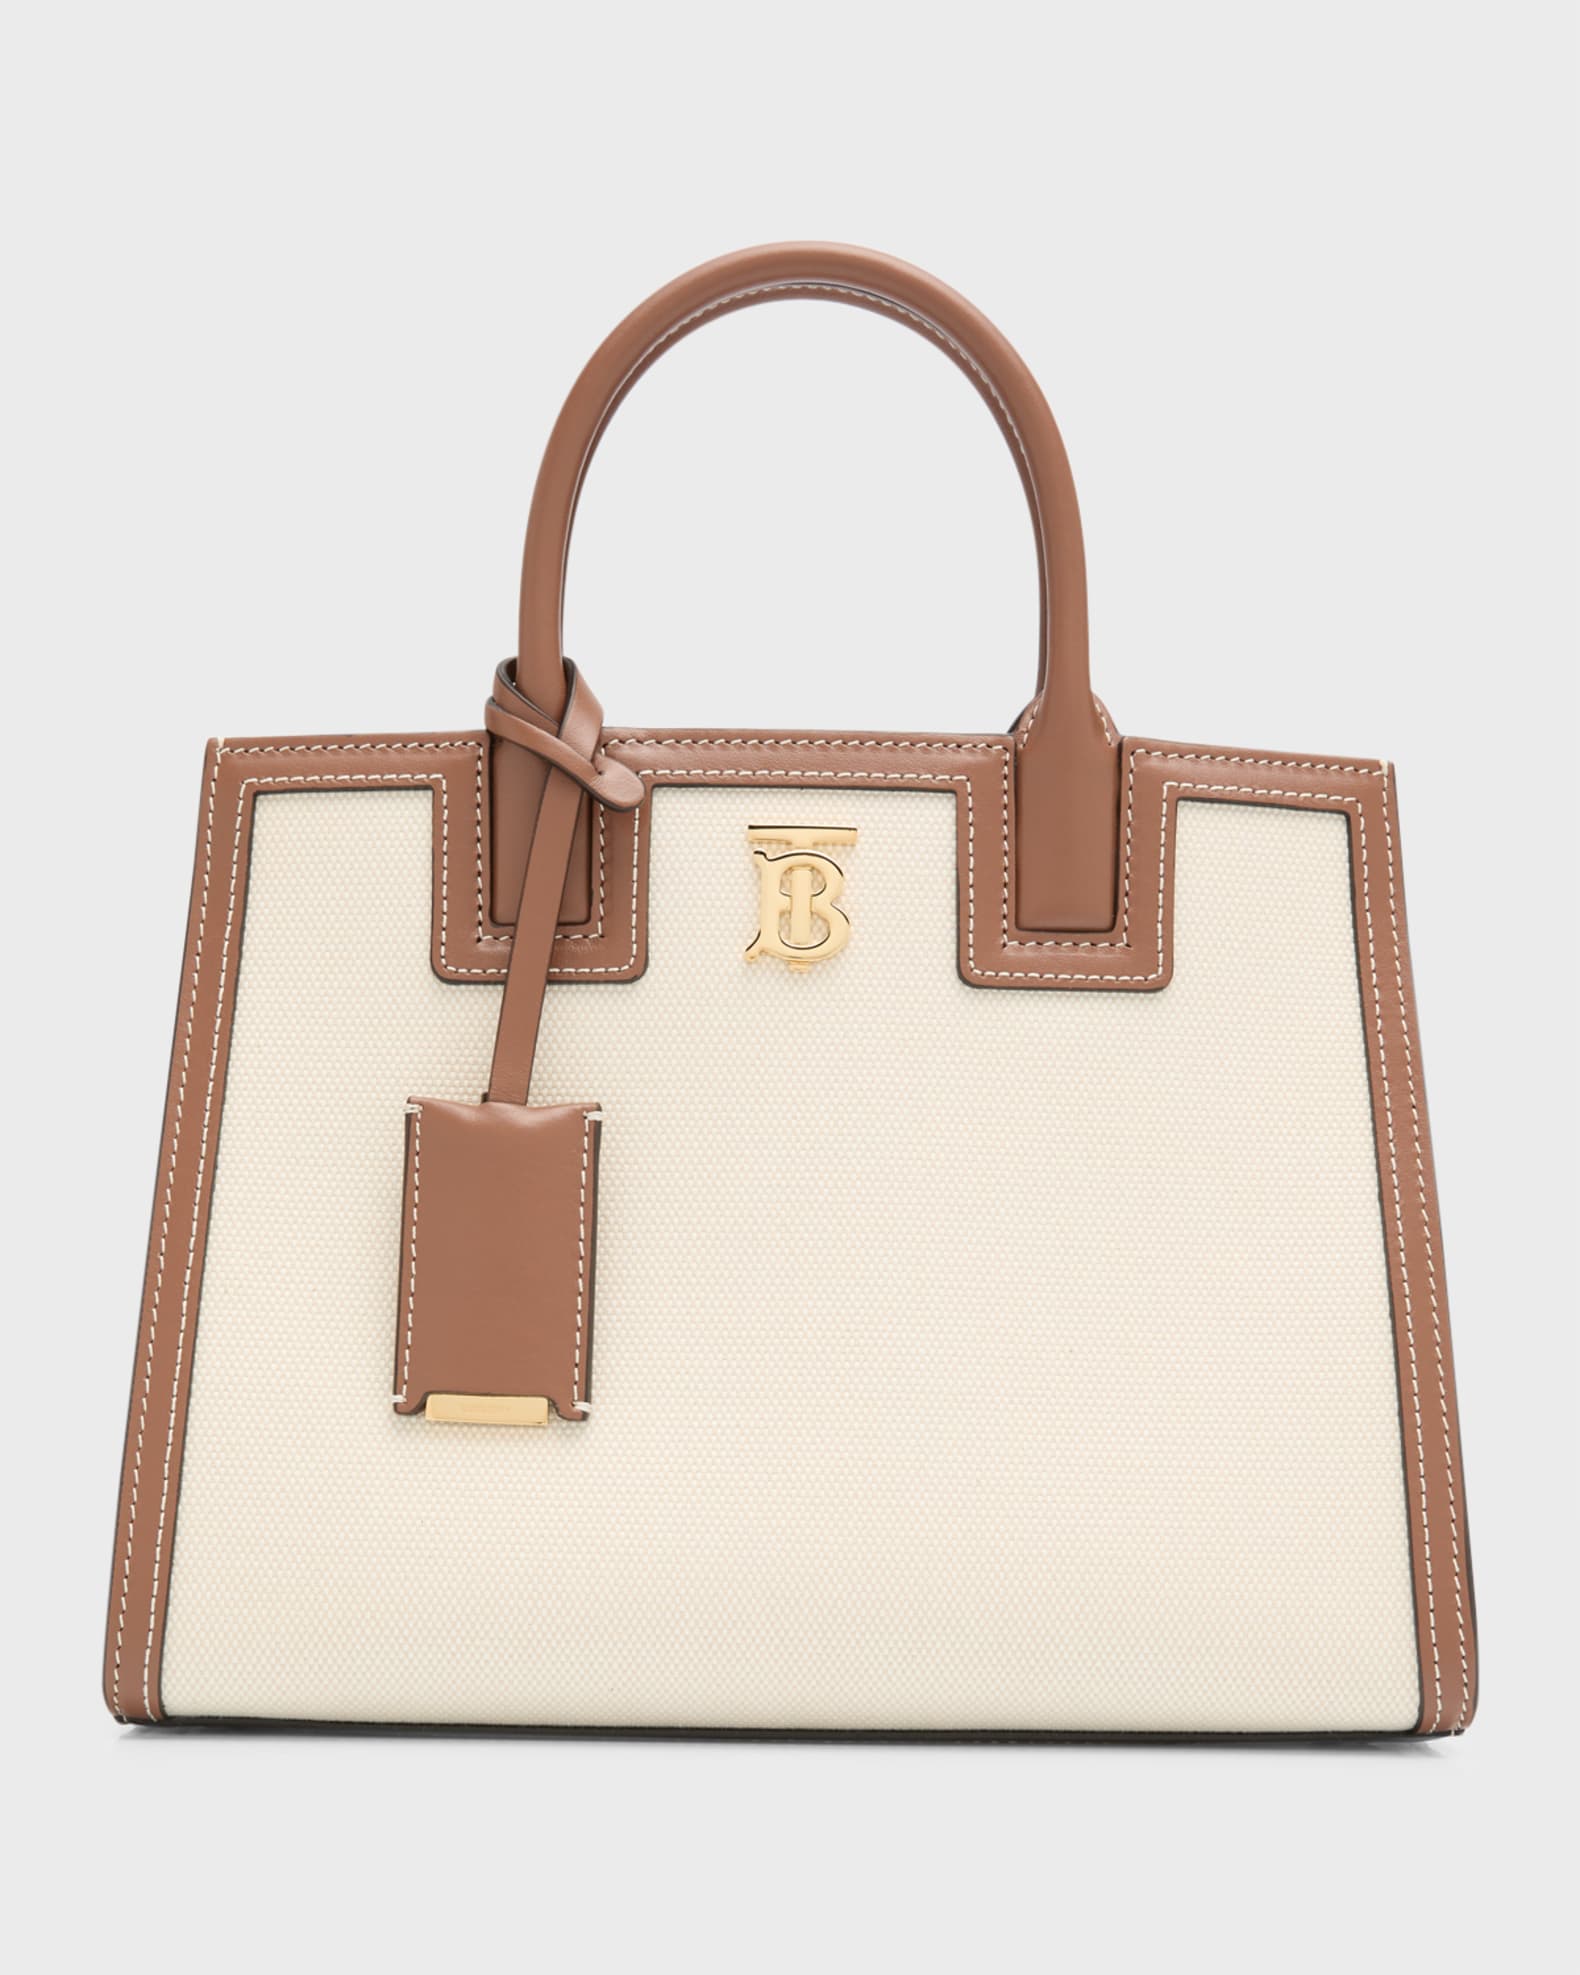 Louis Vuitton Handbag Tote bag Luxury goods, Louis Vuitton shoulder bag  brown chess Ms., brown, luggage Bags png